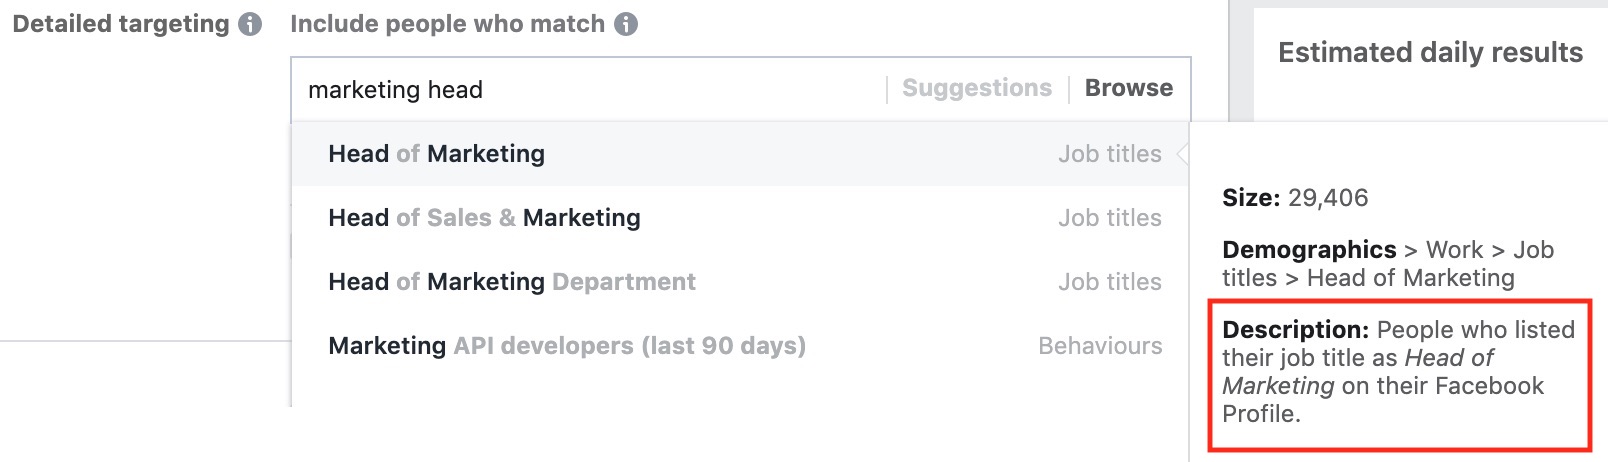 Facebook Job Title Targeting